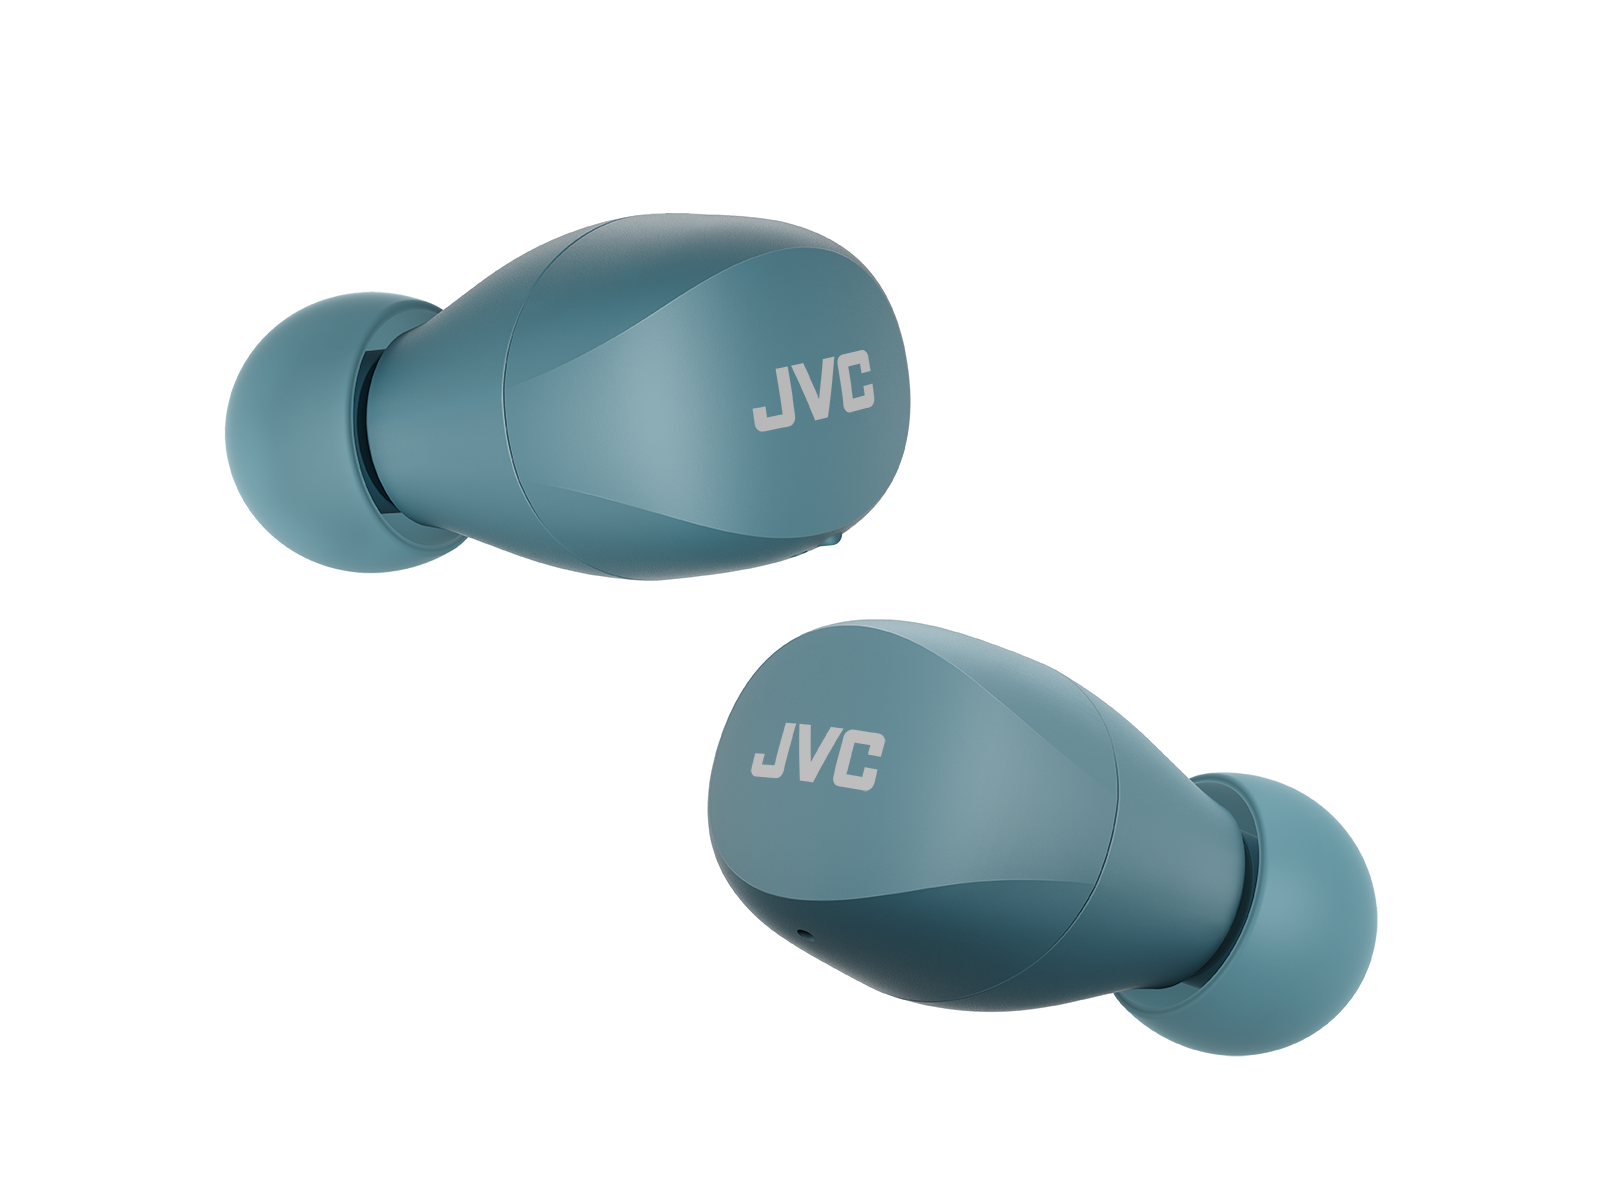 JVC HA-A6T-Z-U True Wireless Gummy fülhallgató akár 23 órás akkumuláto...